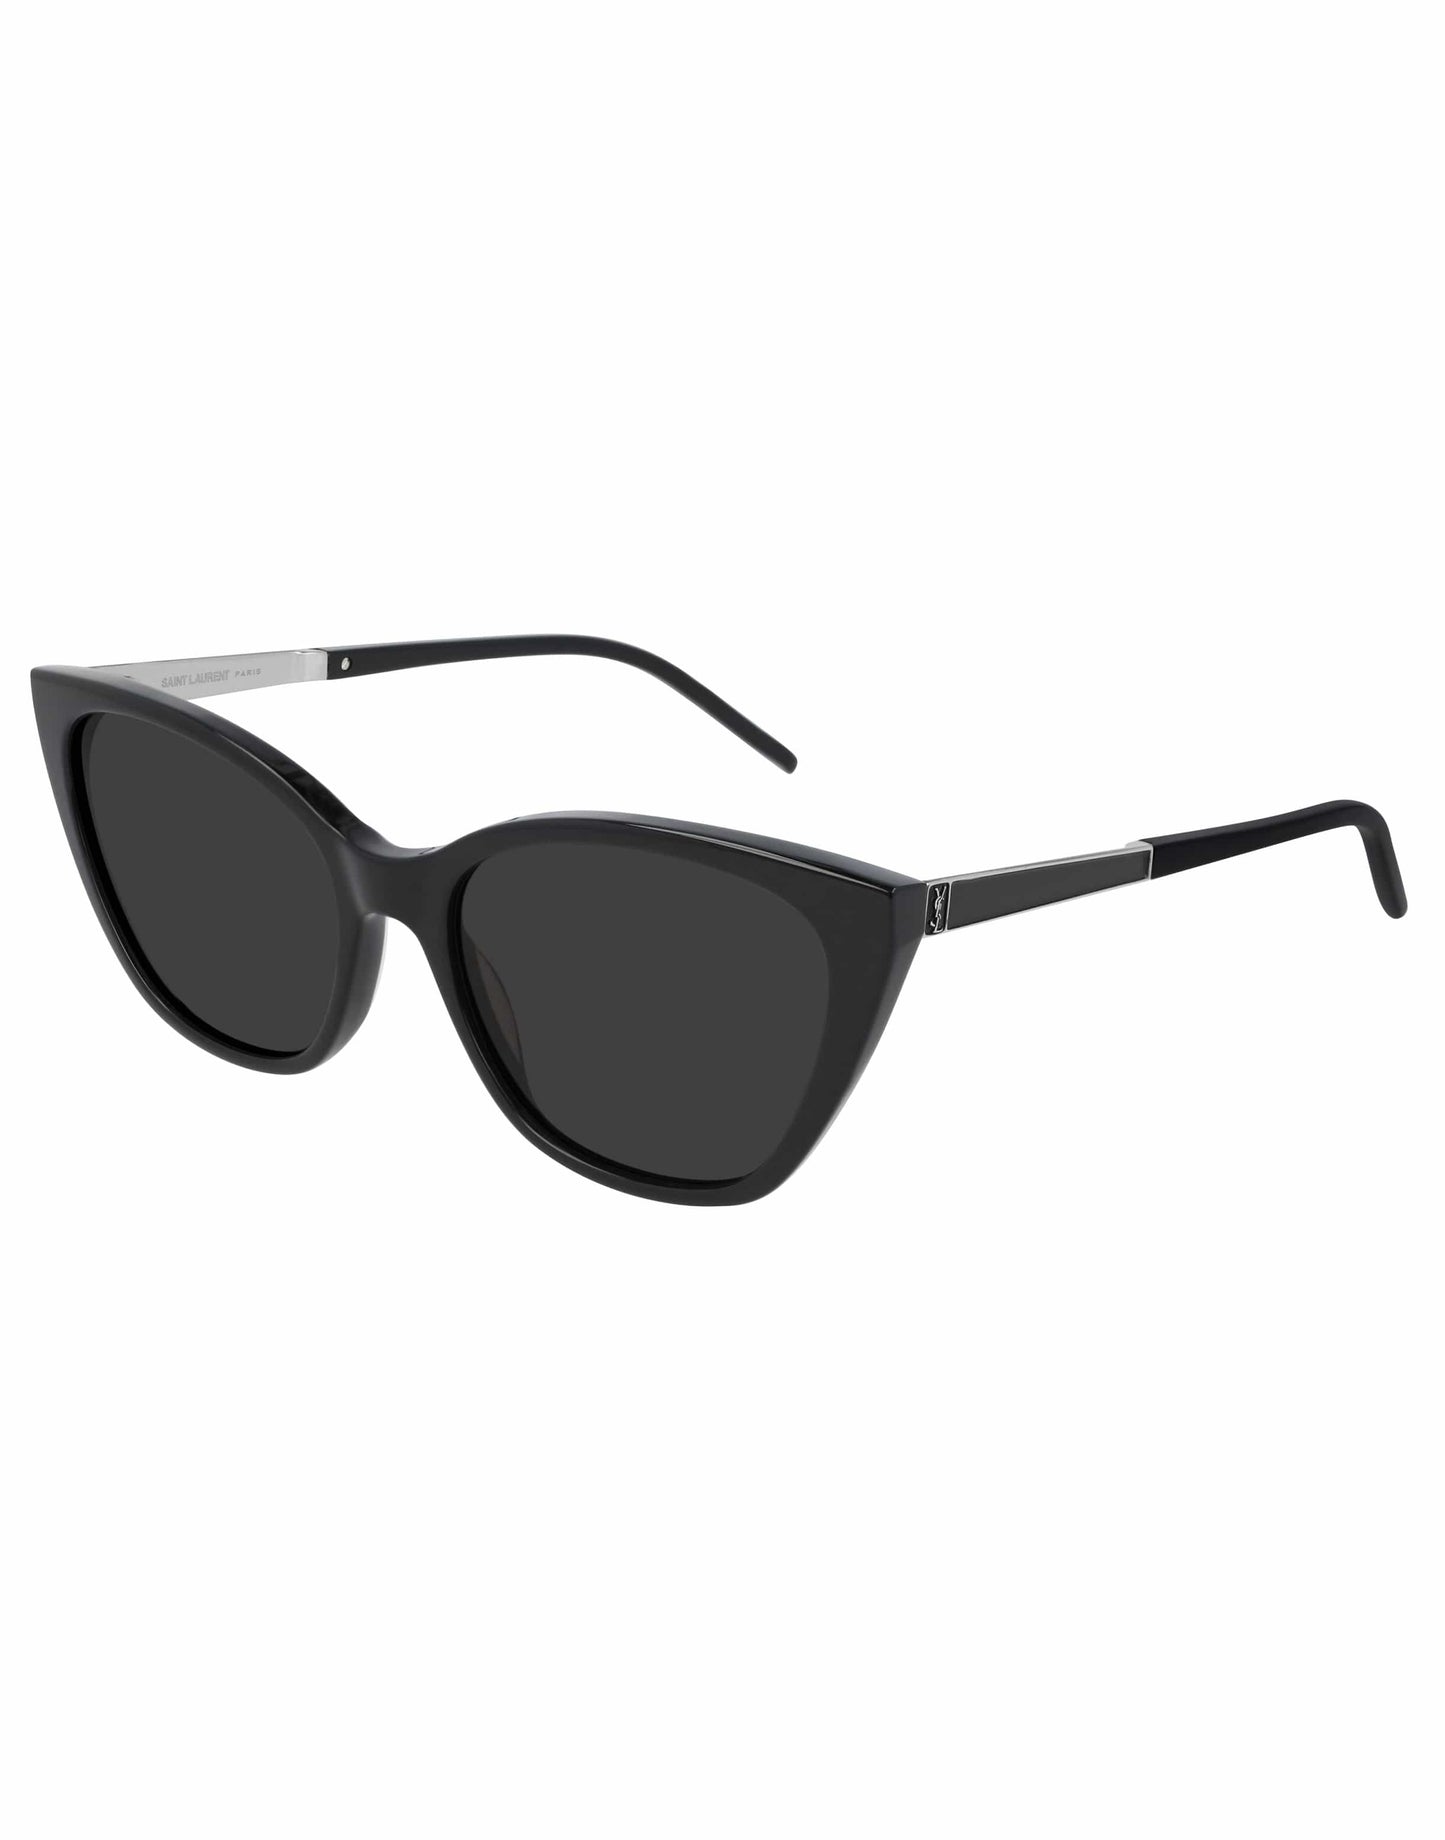 SAINT LAURENT-SL M69 Black Sunglasses-BLACK